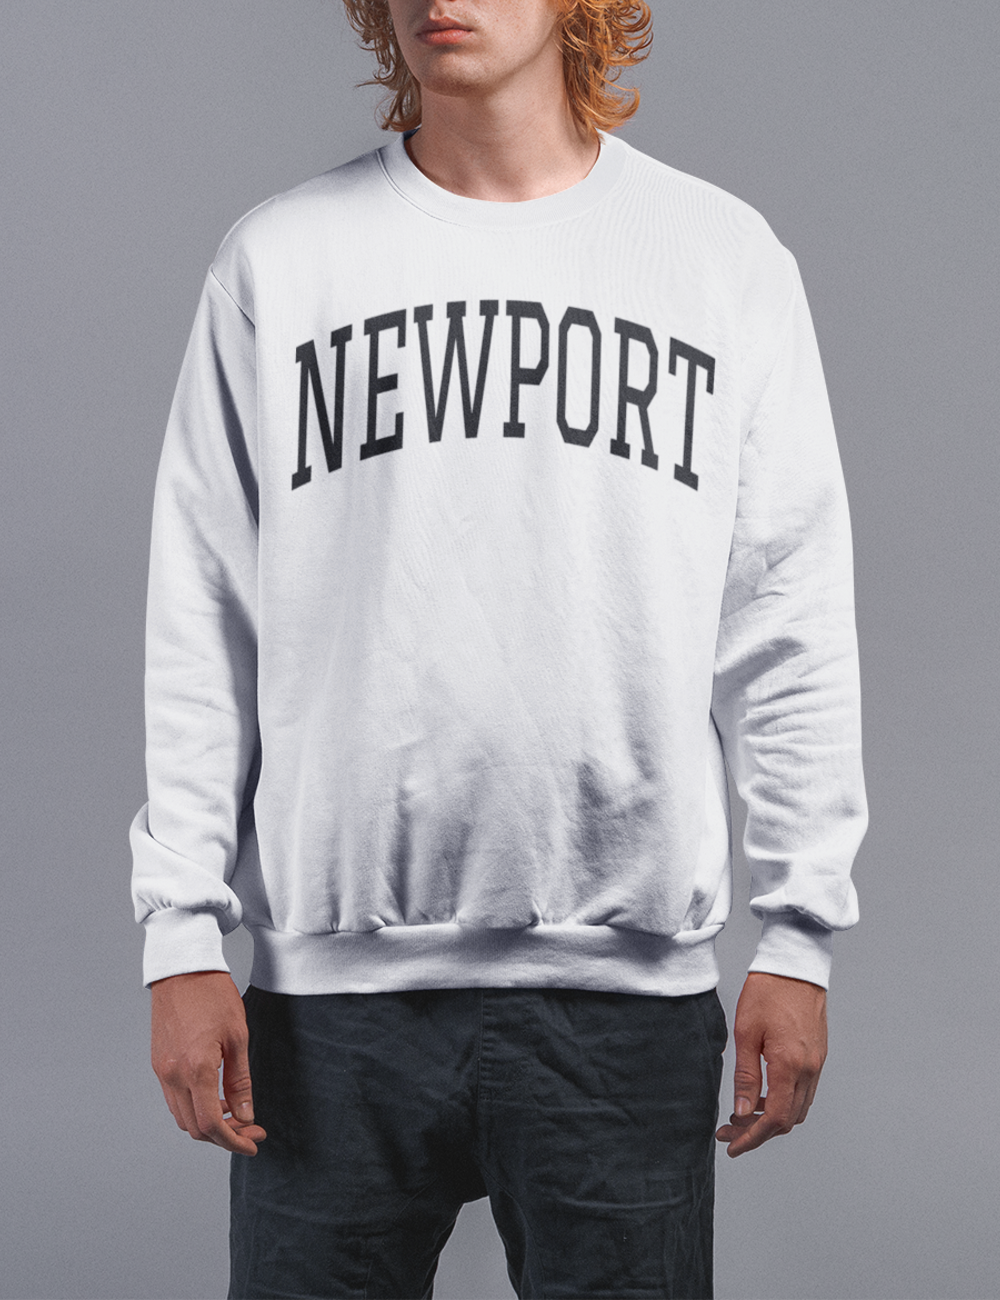 Newport Men's Crewneck Sweatshirt OniTakai